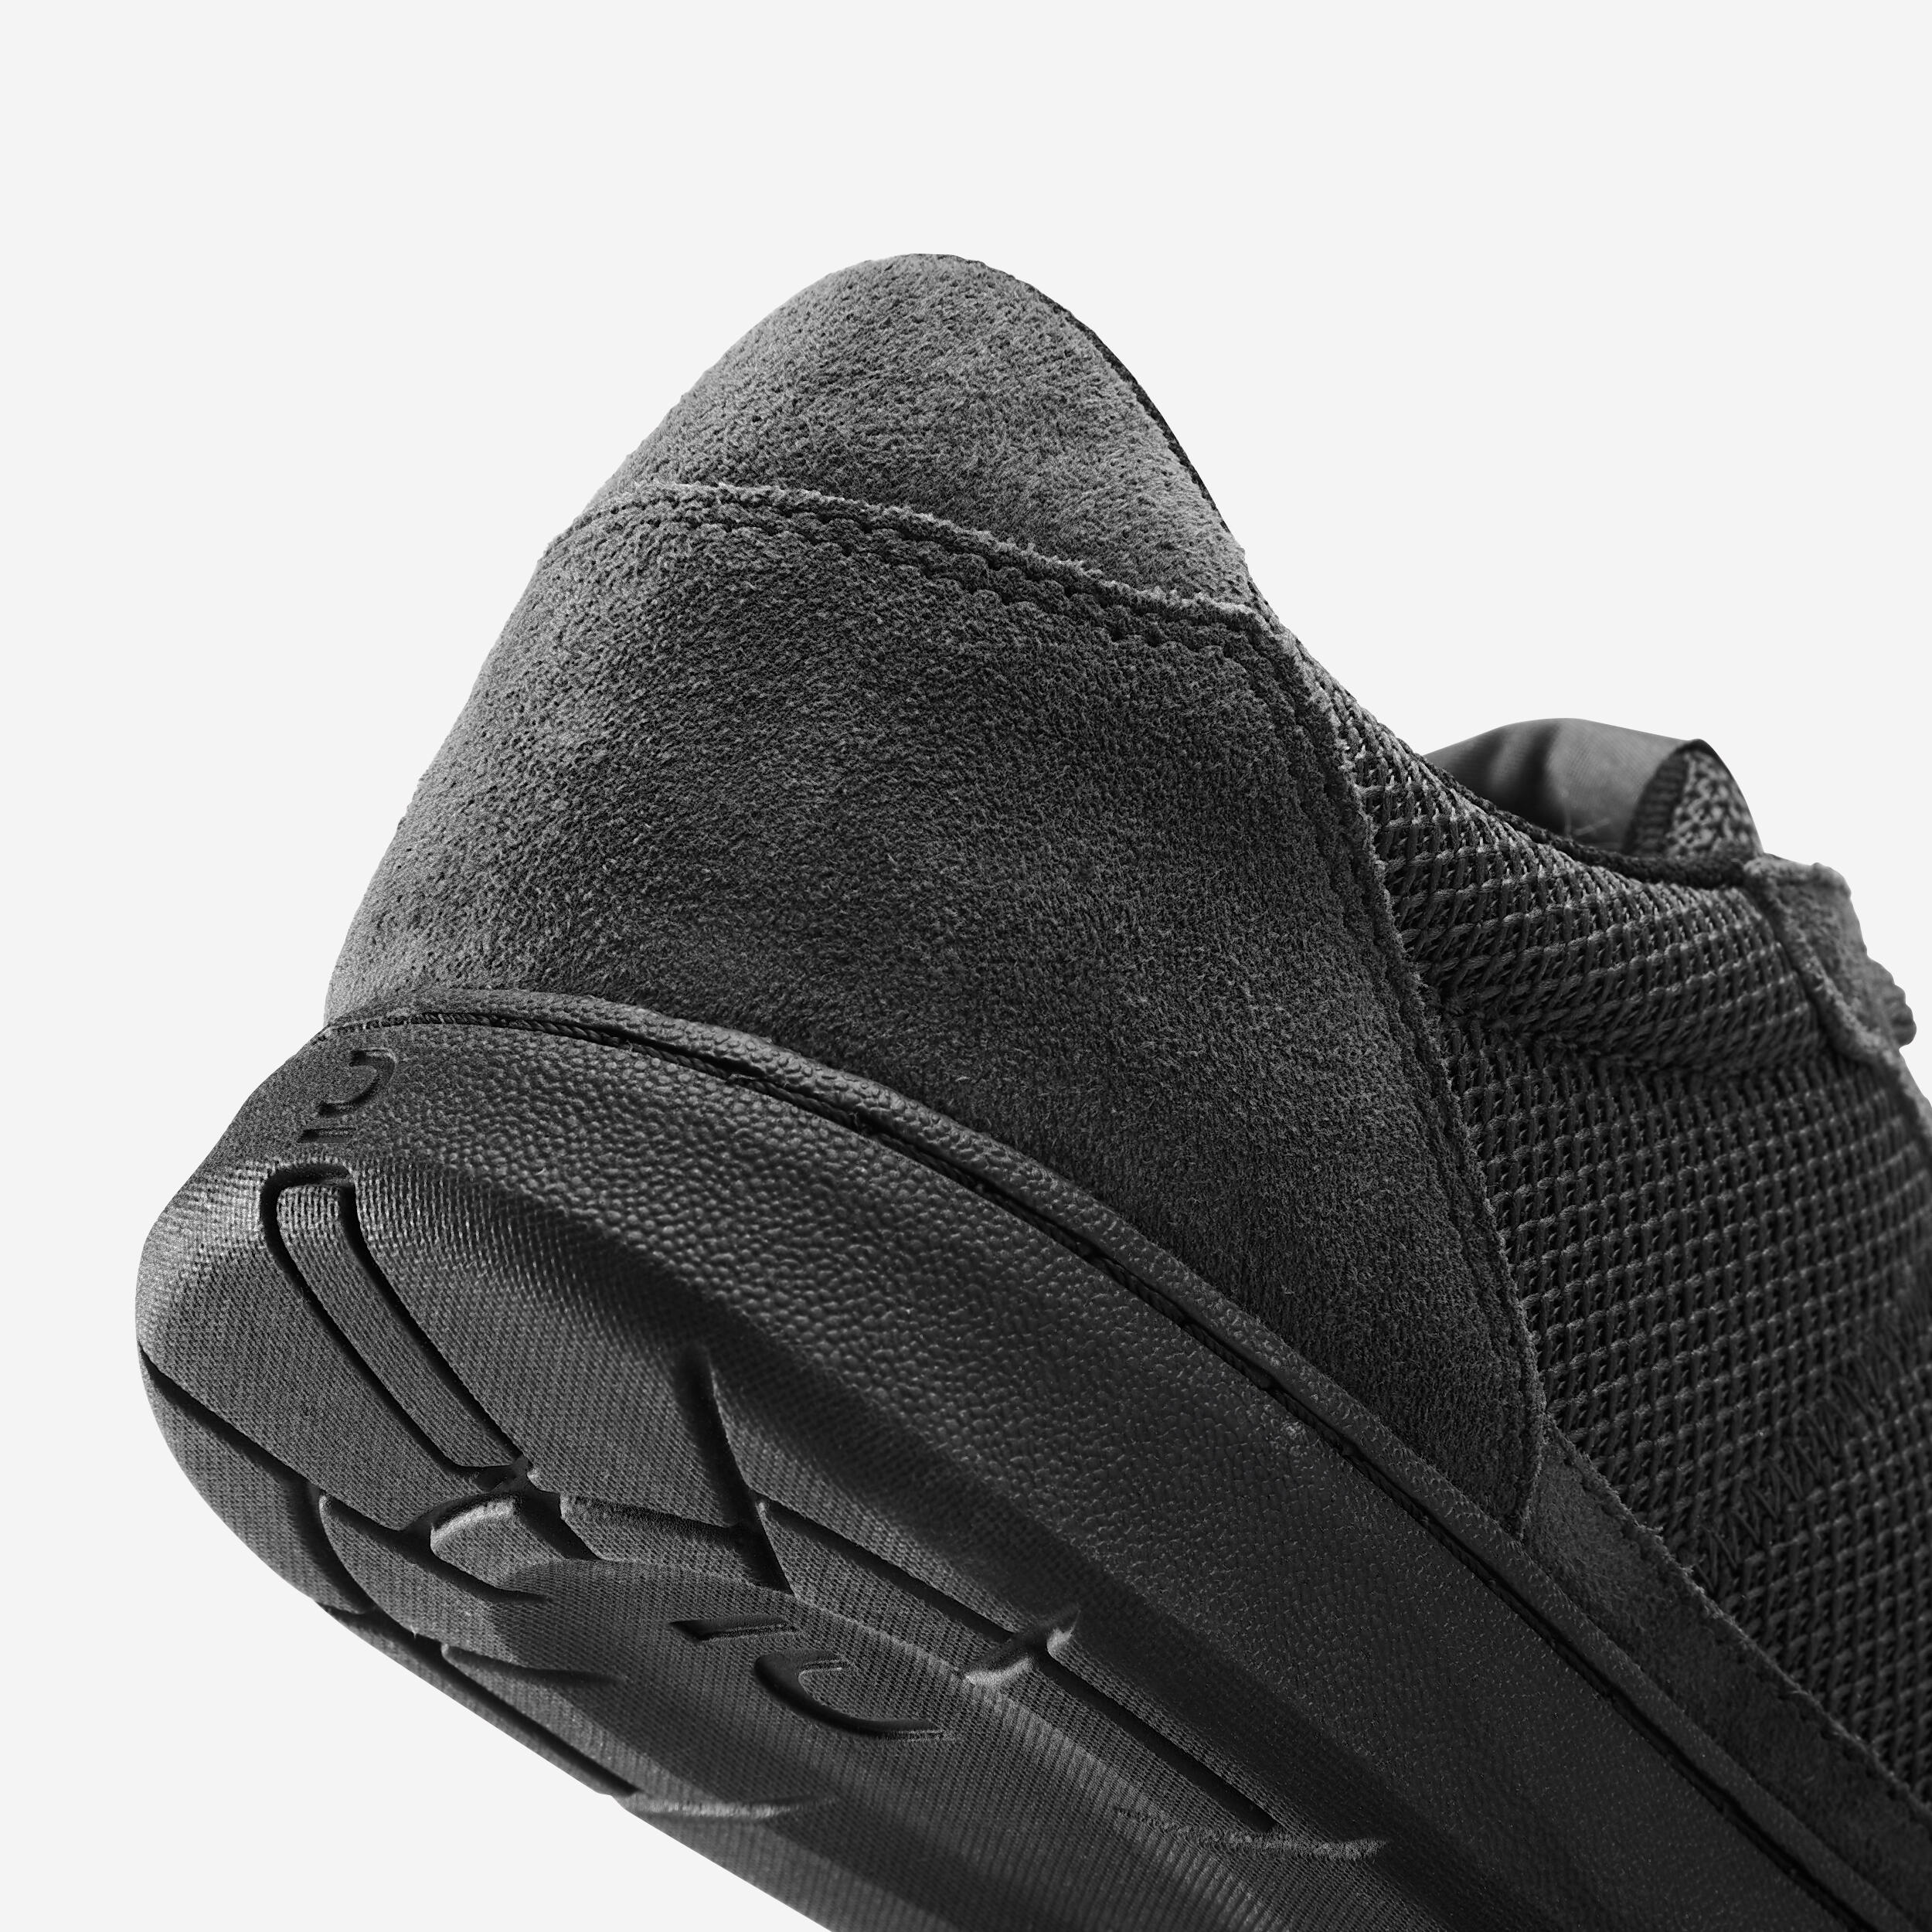 Men's Urban Walking Shoes Walk Protect Mesh - Dark Grey 5/8